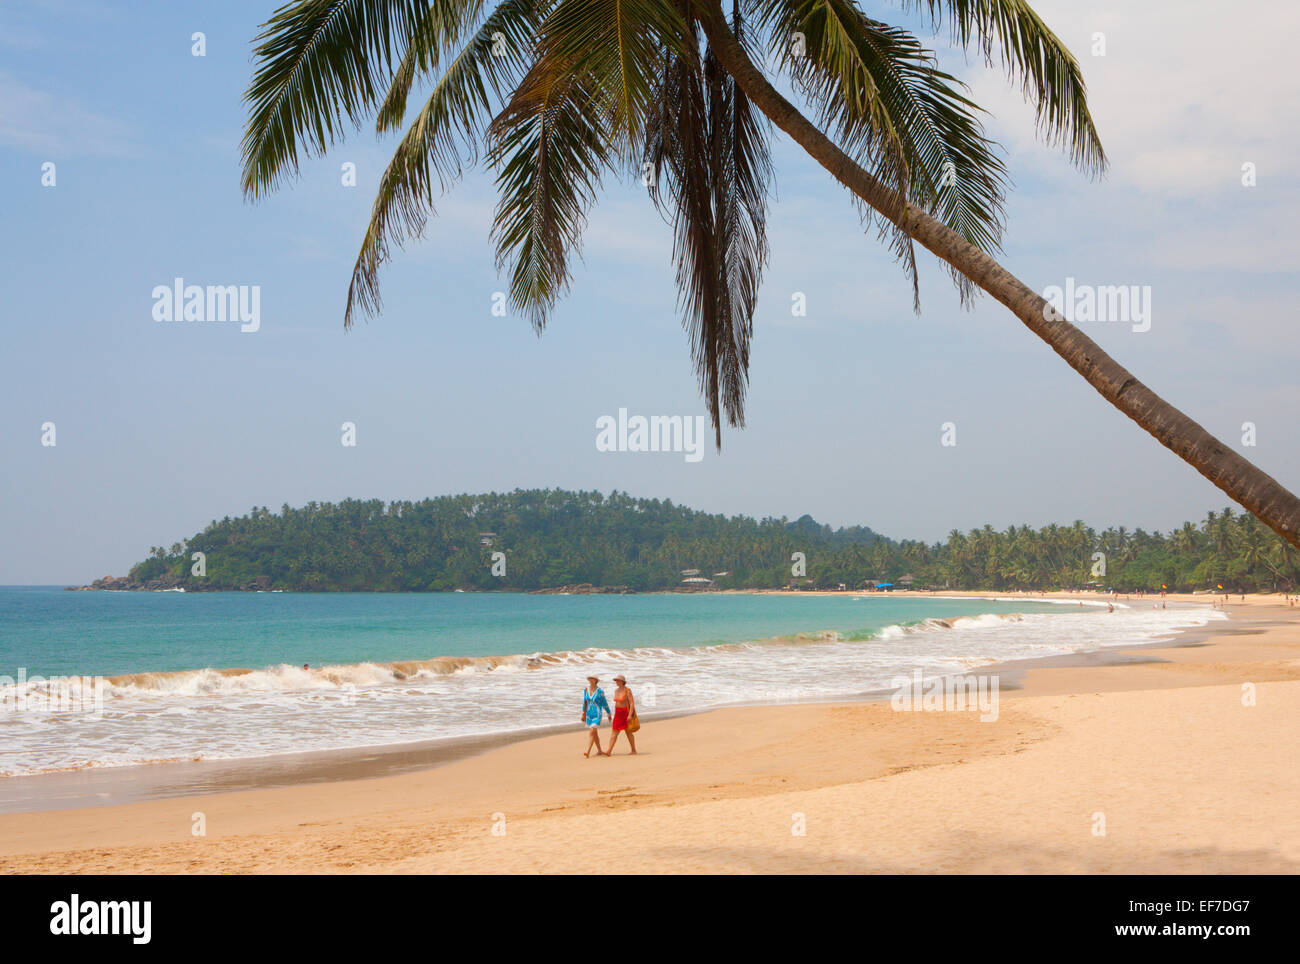 TOURISTS WALKING ALONG SANDY BEACH WITH PALM TREE Stock Photo